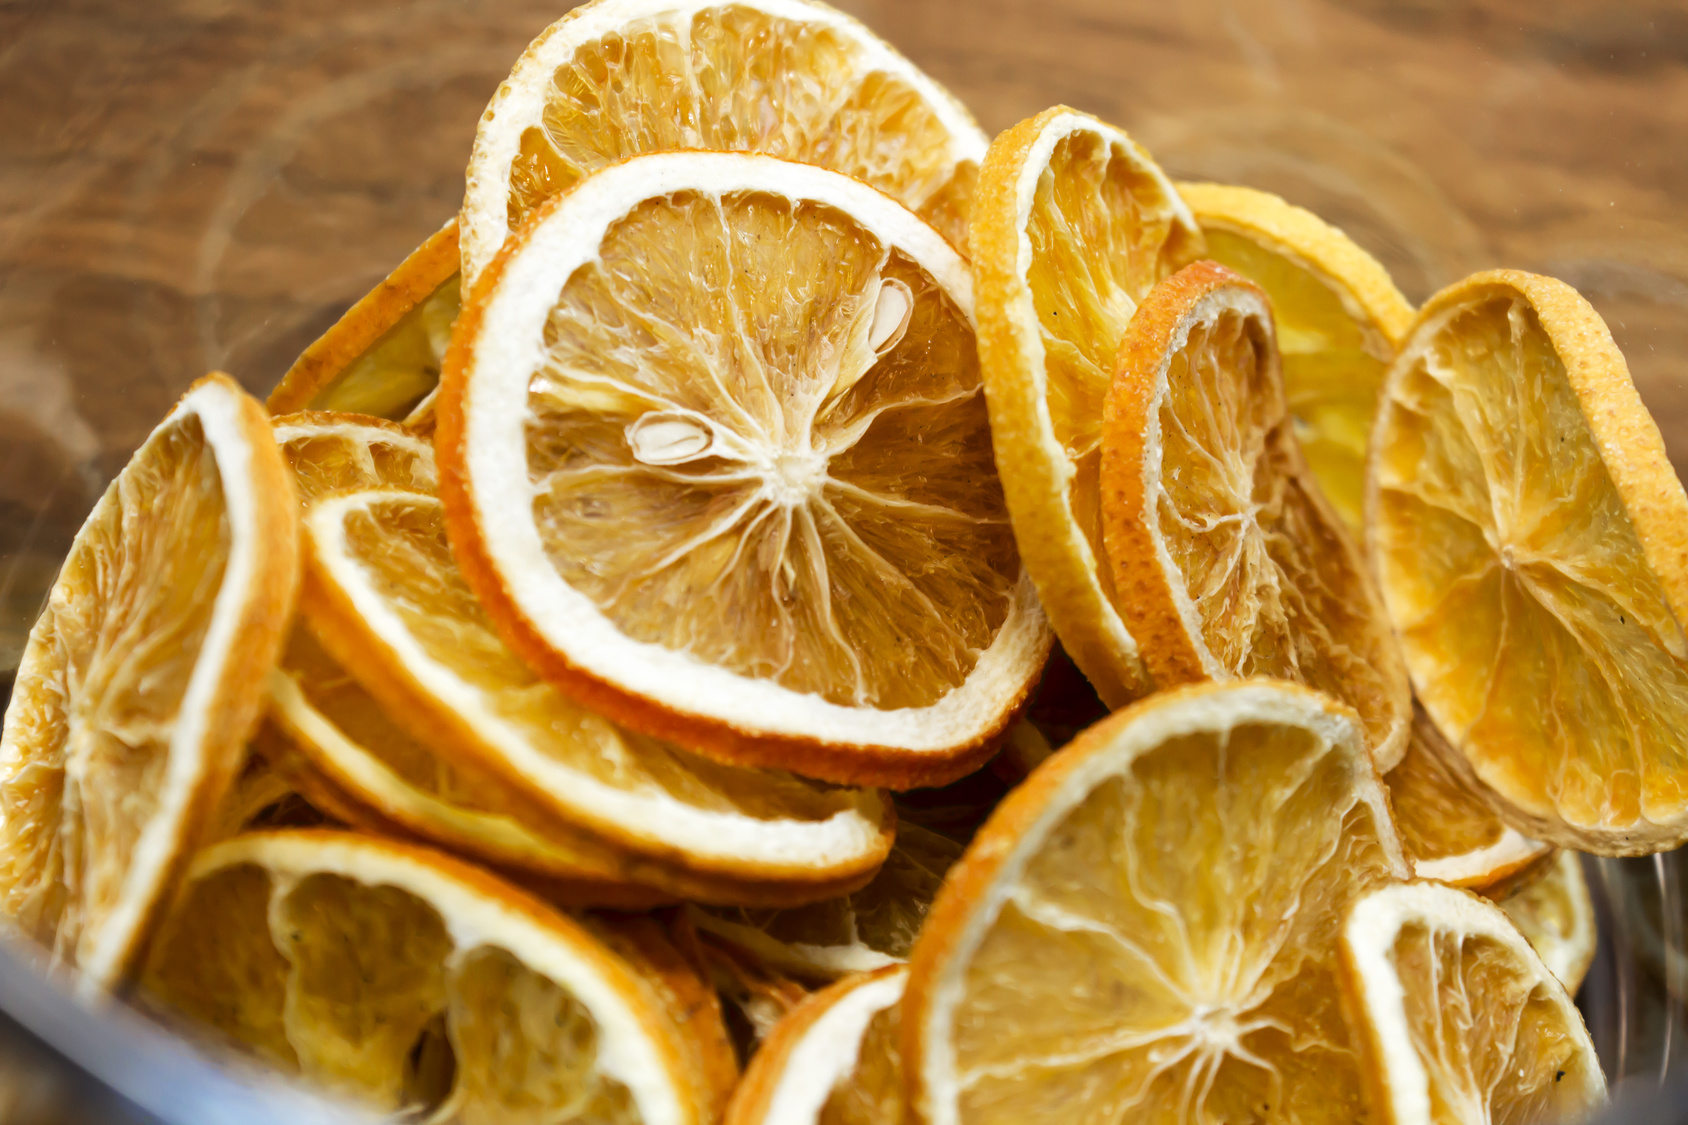 Rodajas de naranja deshidratada